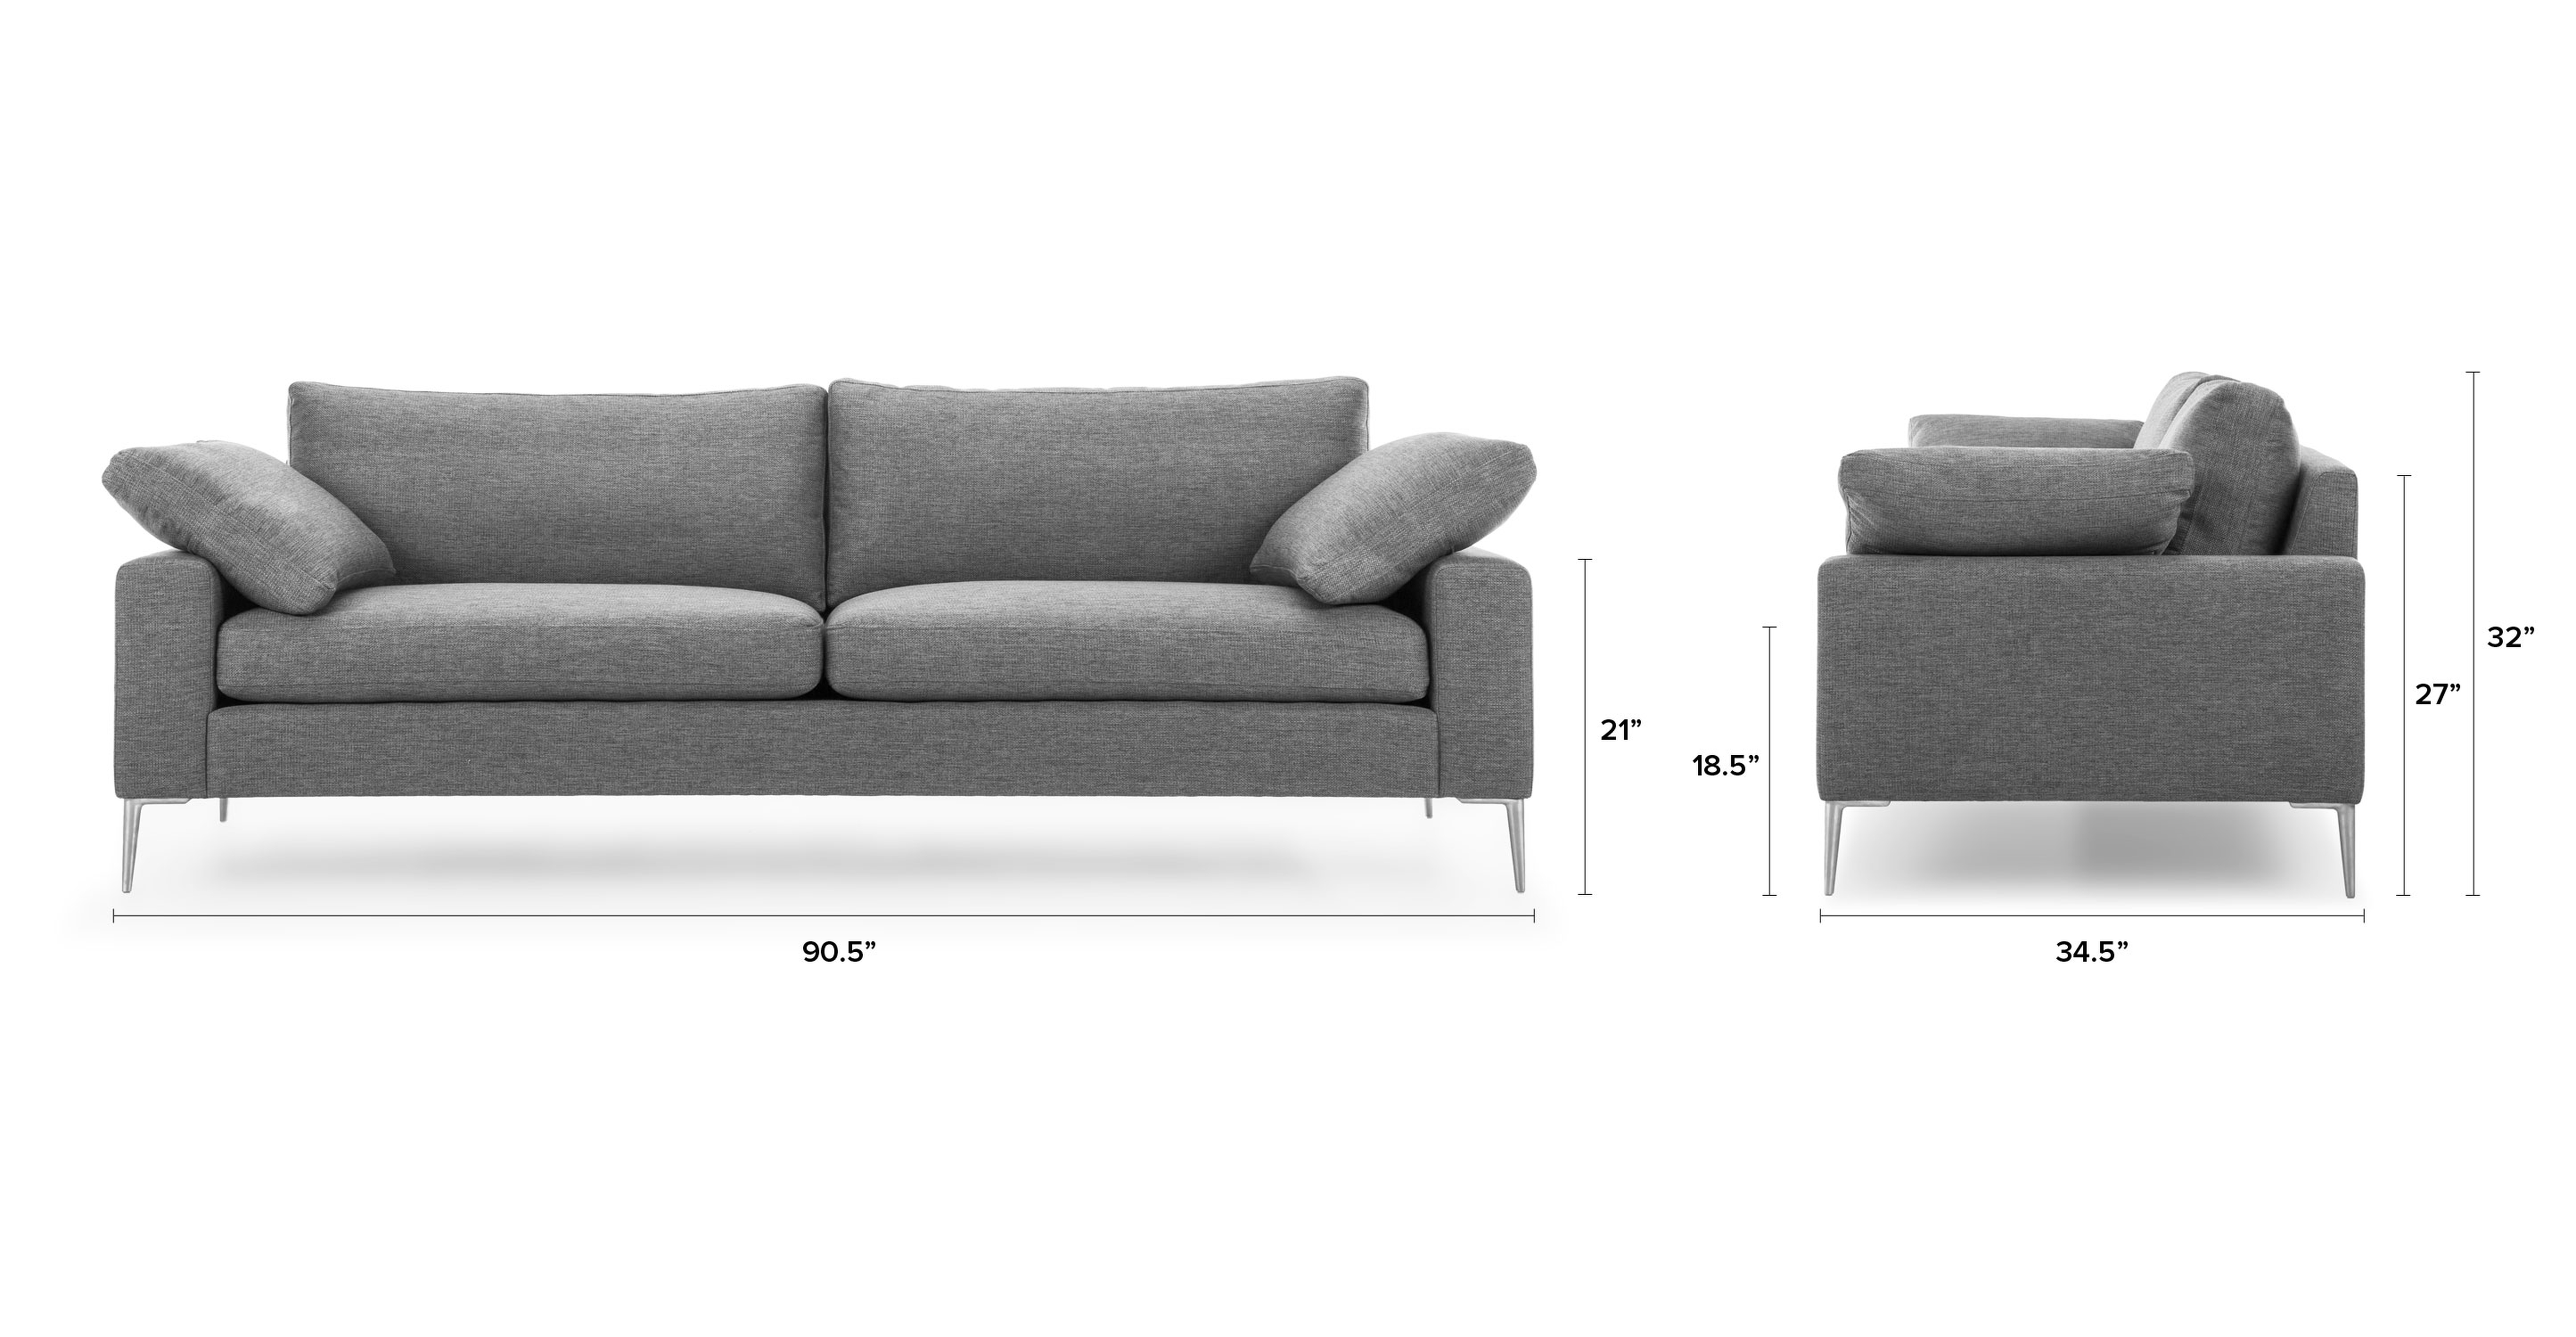 Nova 90.5" Sofa - Gravel Gray - Article